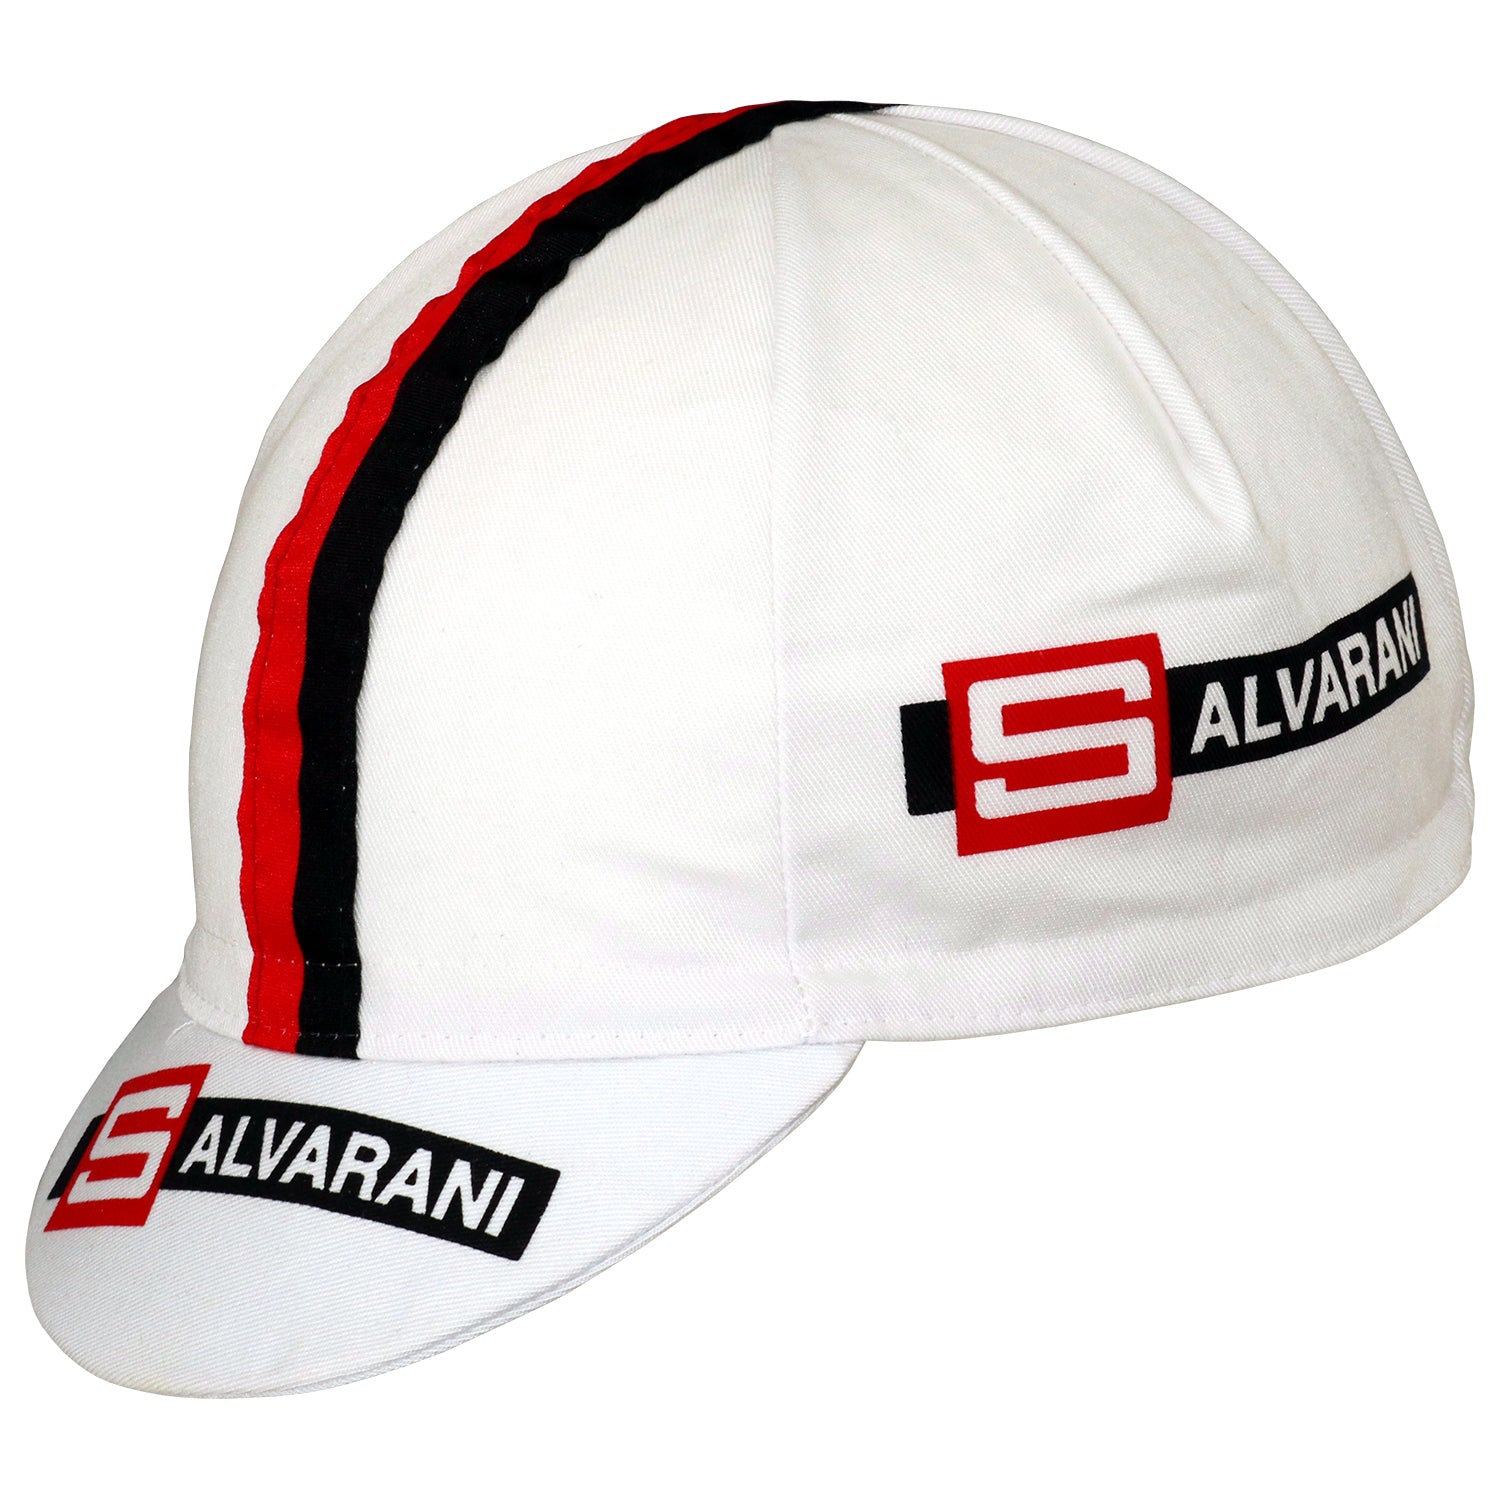 Salvarani Retro Cotton Cycling Cap